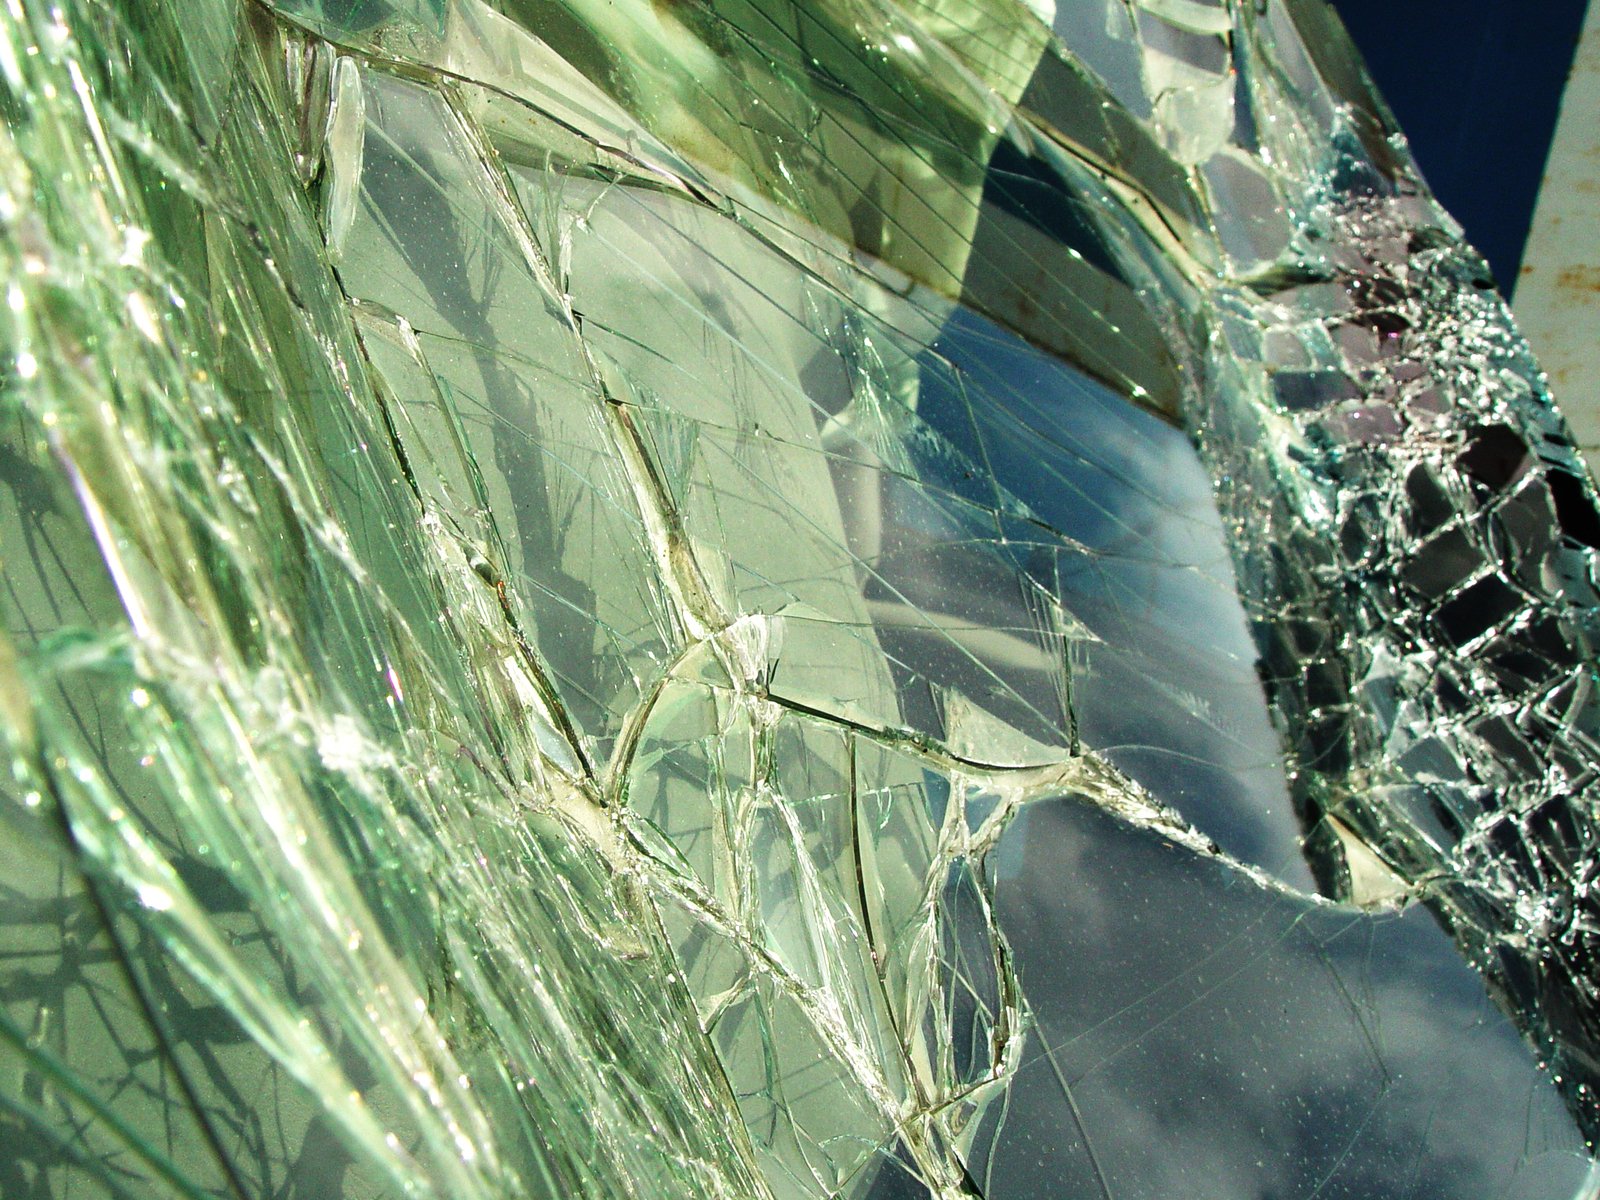 shattered, broken glass with green vegetation against a dark background